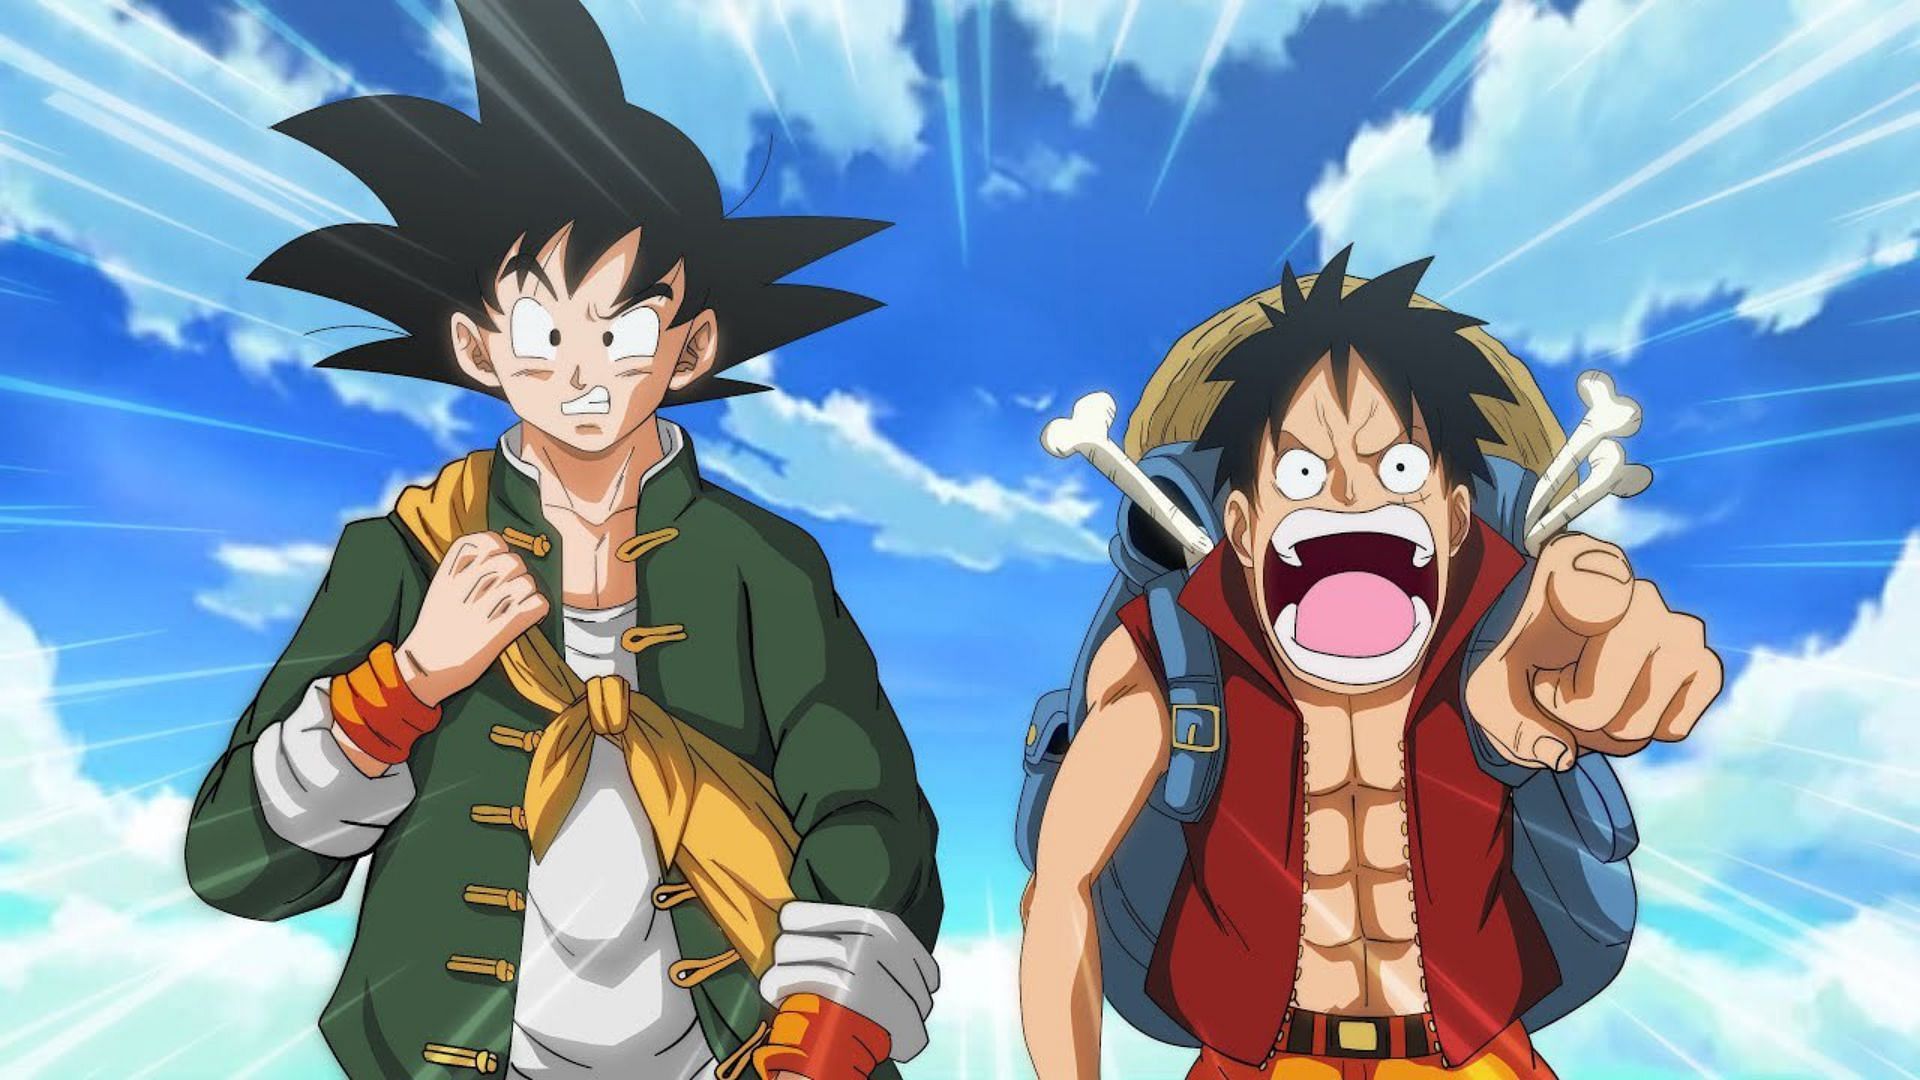 Goku and Luffy (Image via Toei Animation)